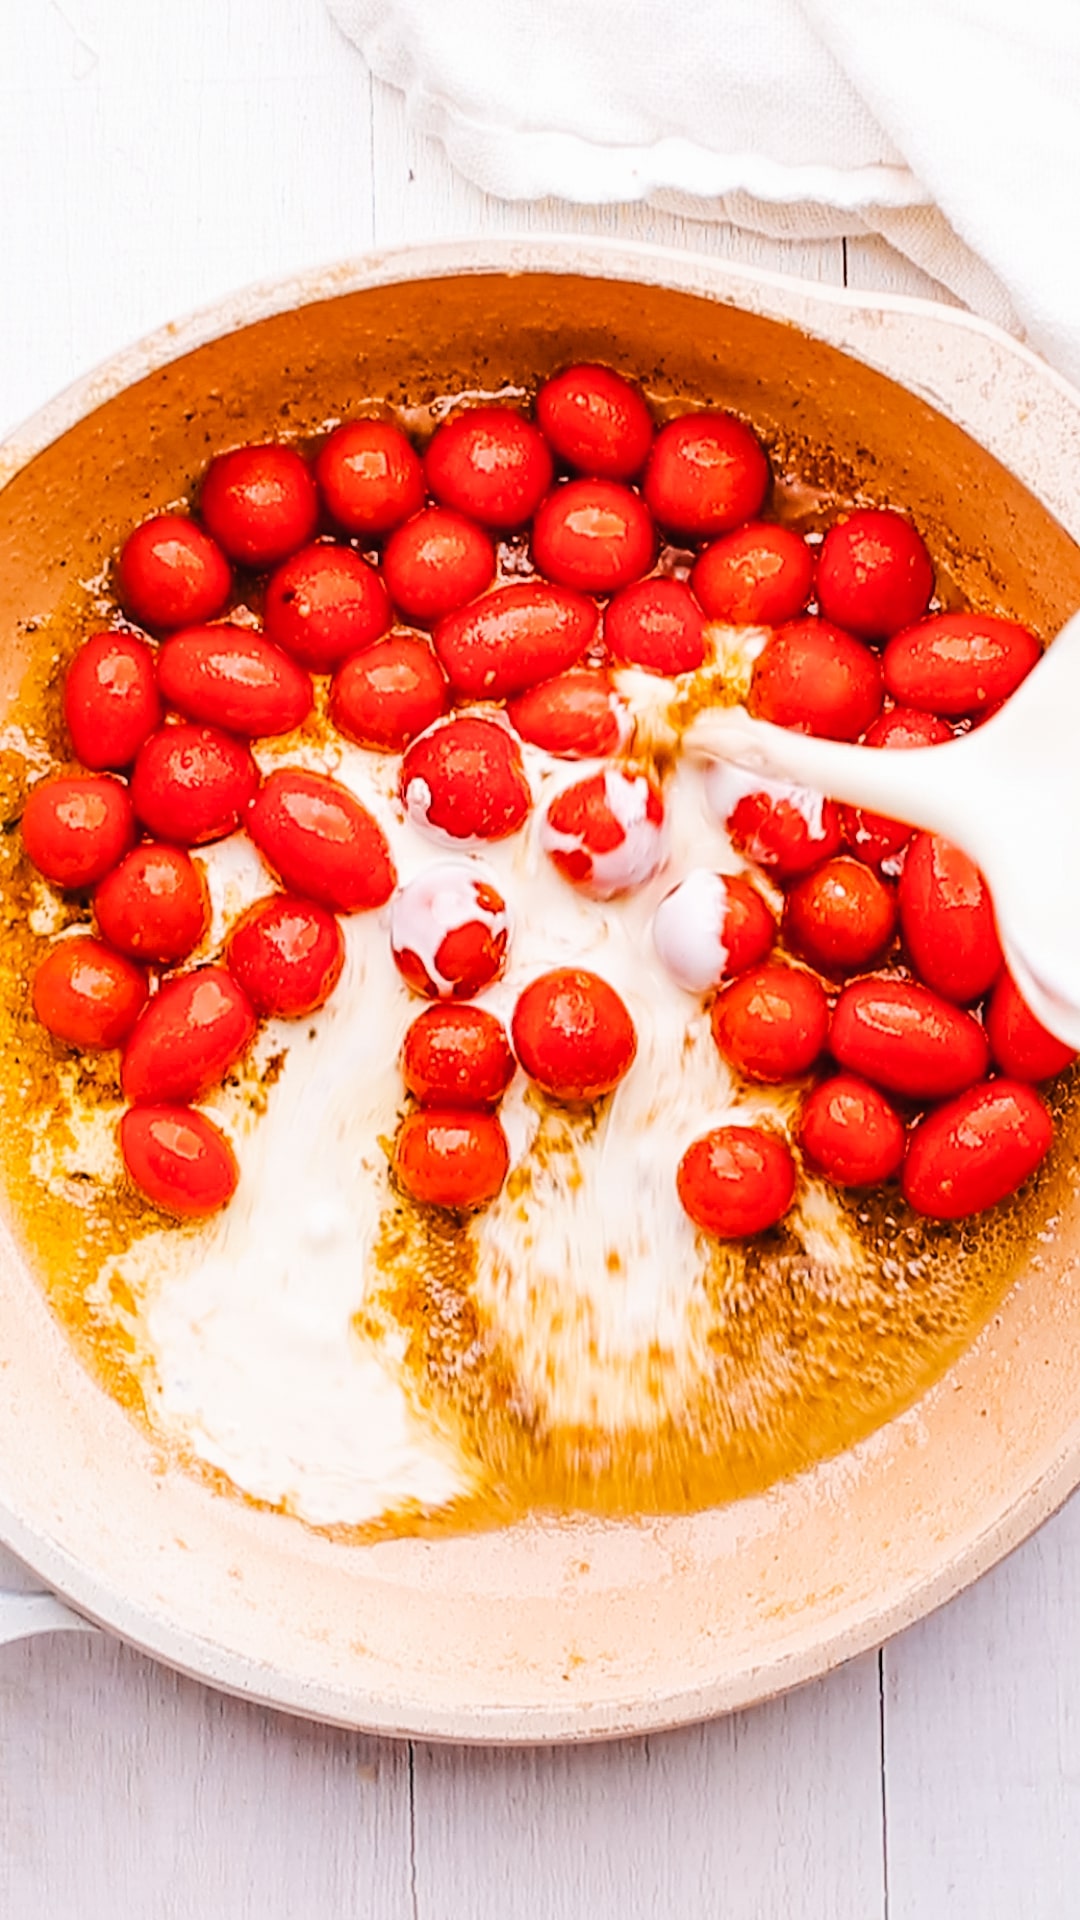 adding cream in tomatoes for gnocchi sauce